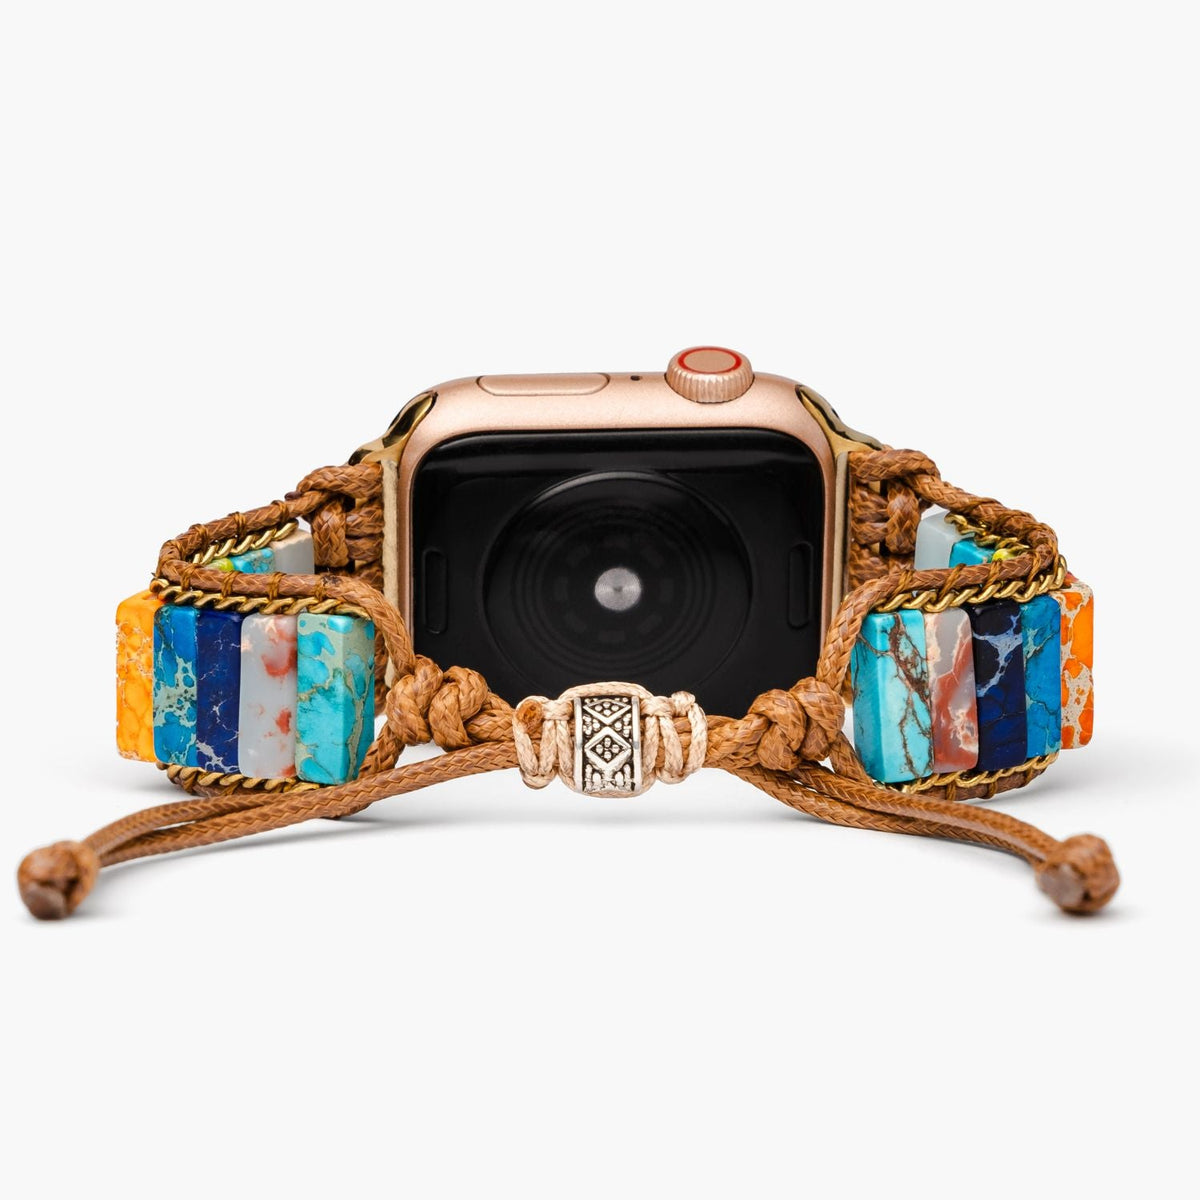 Healing Chakra Protection Apple Watch Strap - Cape Diablo